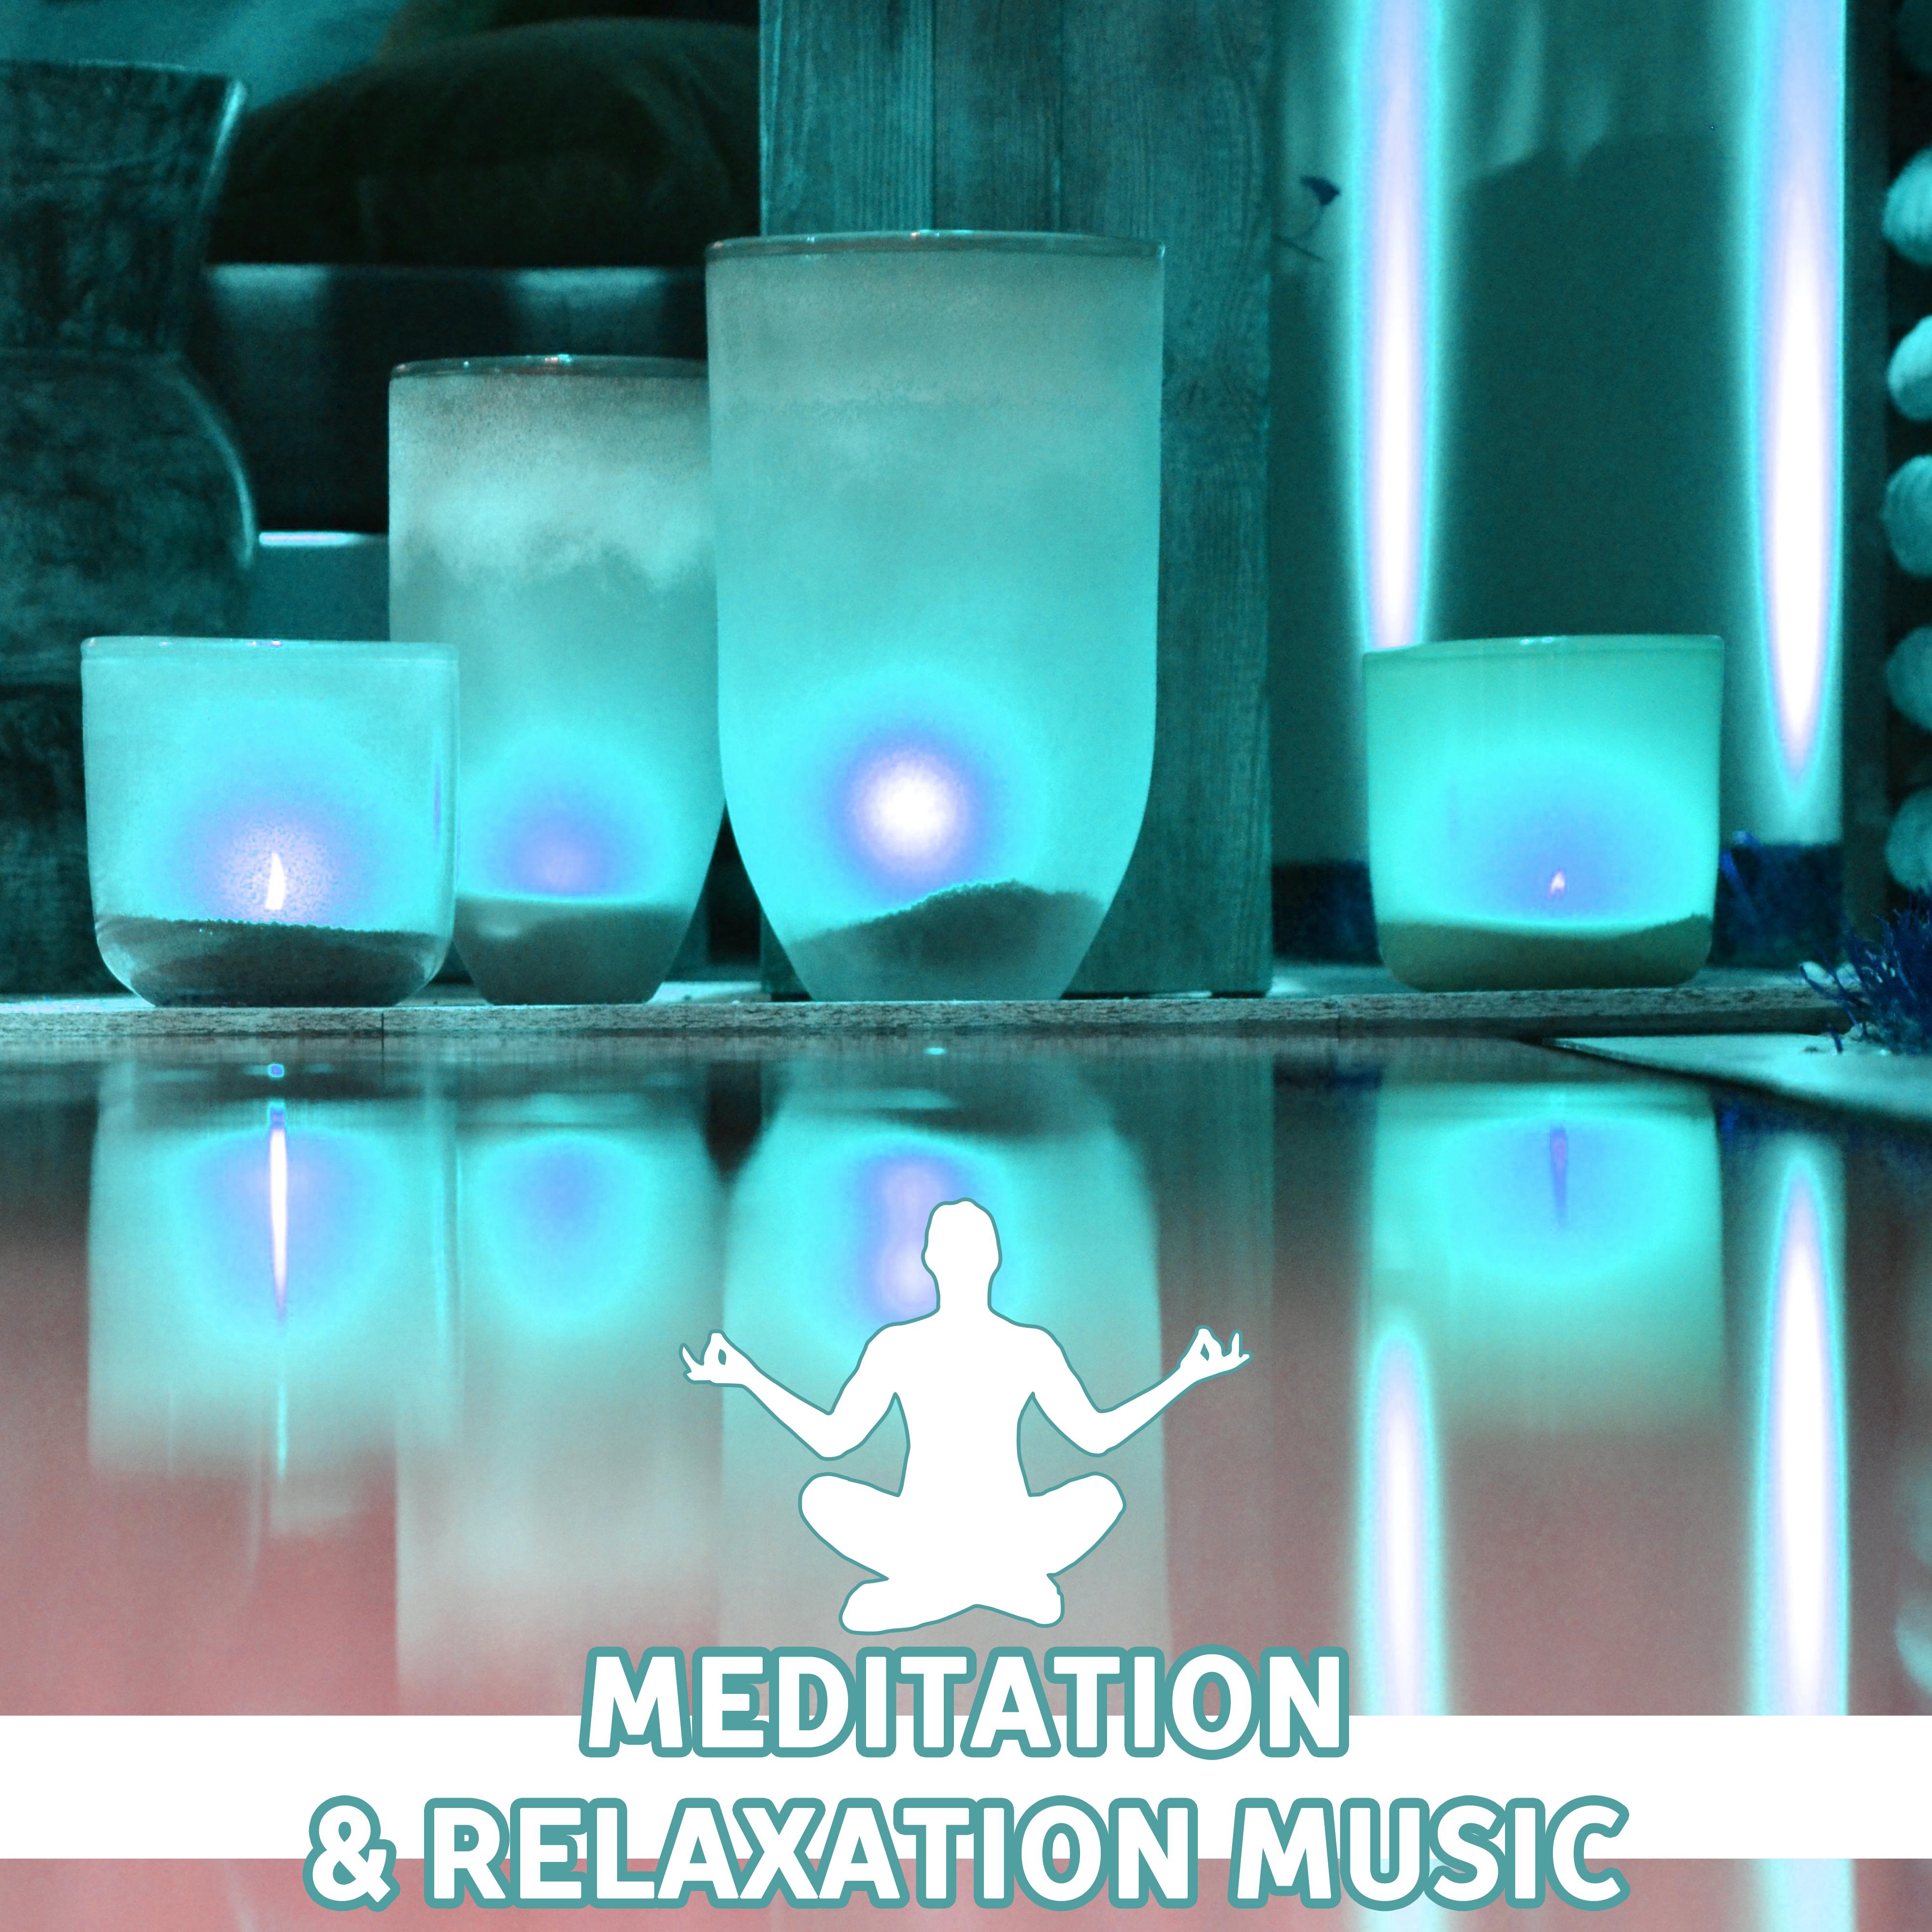 Meditation  Relaxation Music  Sounds to Meditate, Buddha Relaxation, New Age Lounge Music